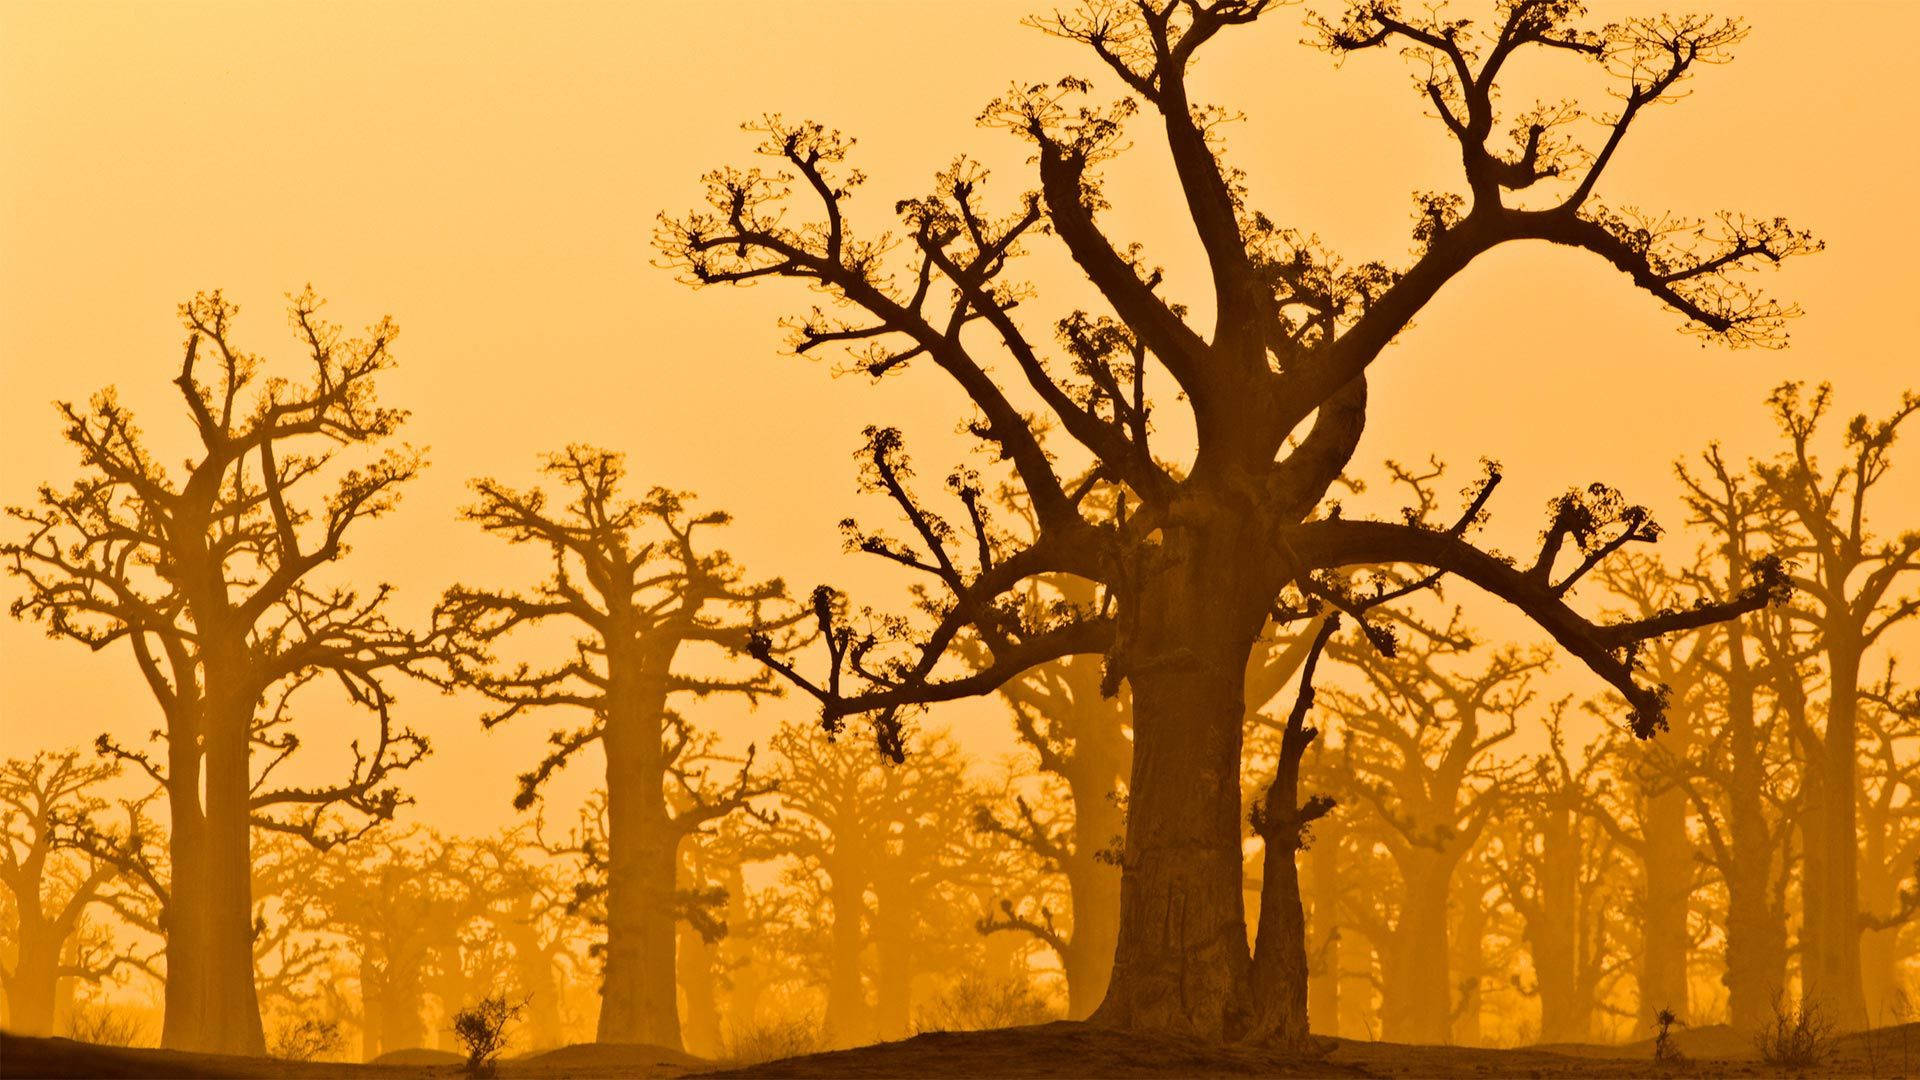 Senegal Baobab Trees